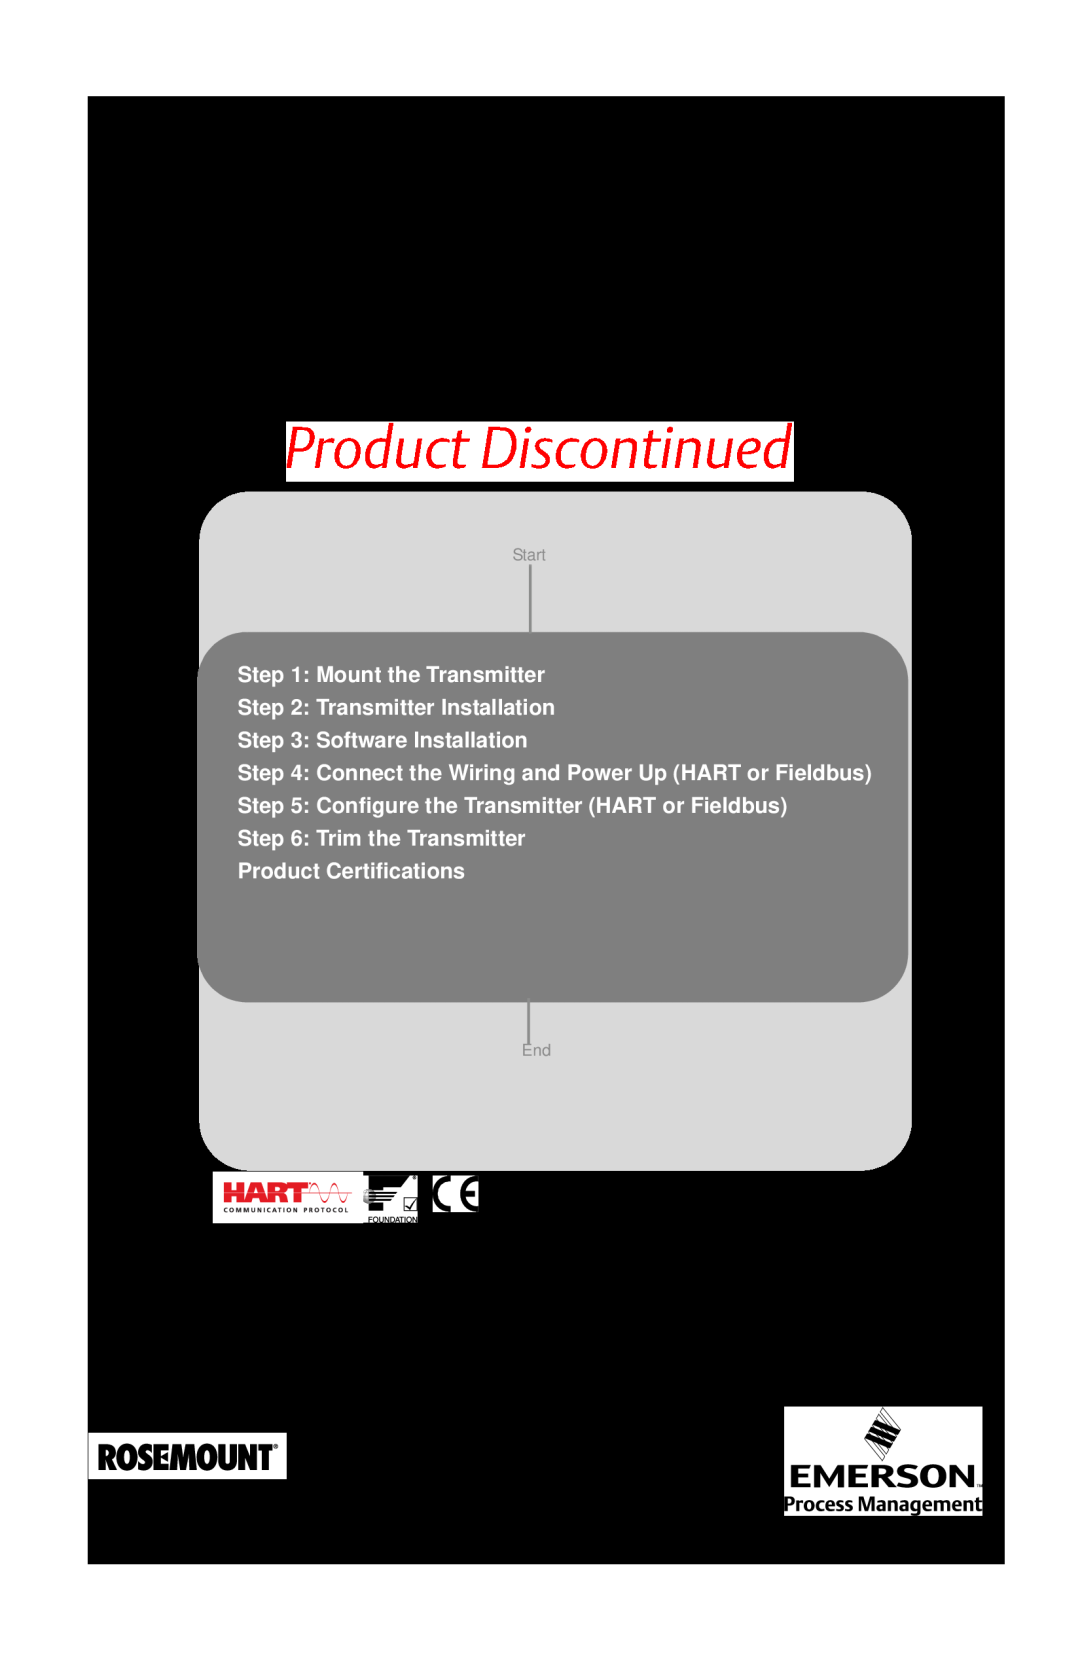 Emerson manual Rosemount 3095 MultiVariable, Quick Installation Guide, ¢00825-0100-4716/¤ 